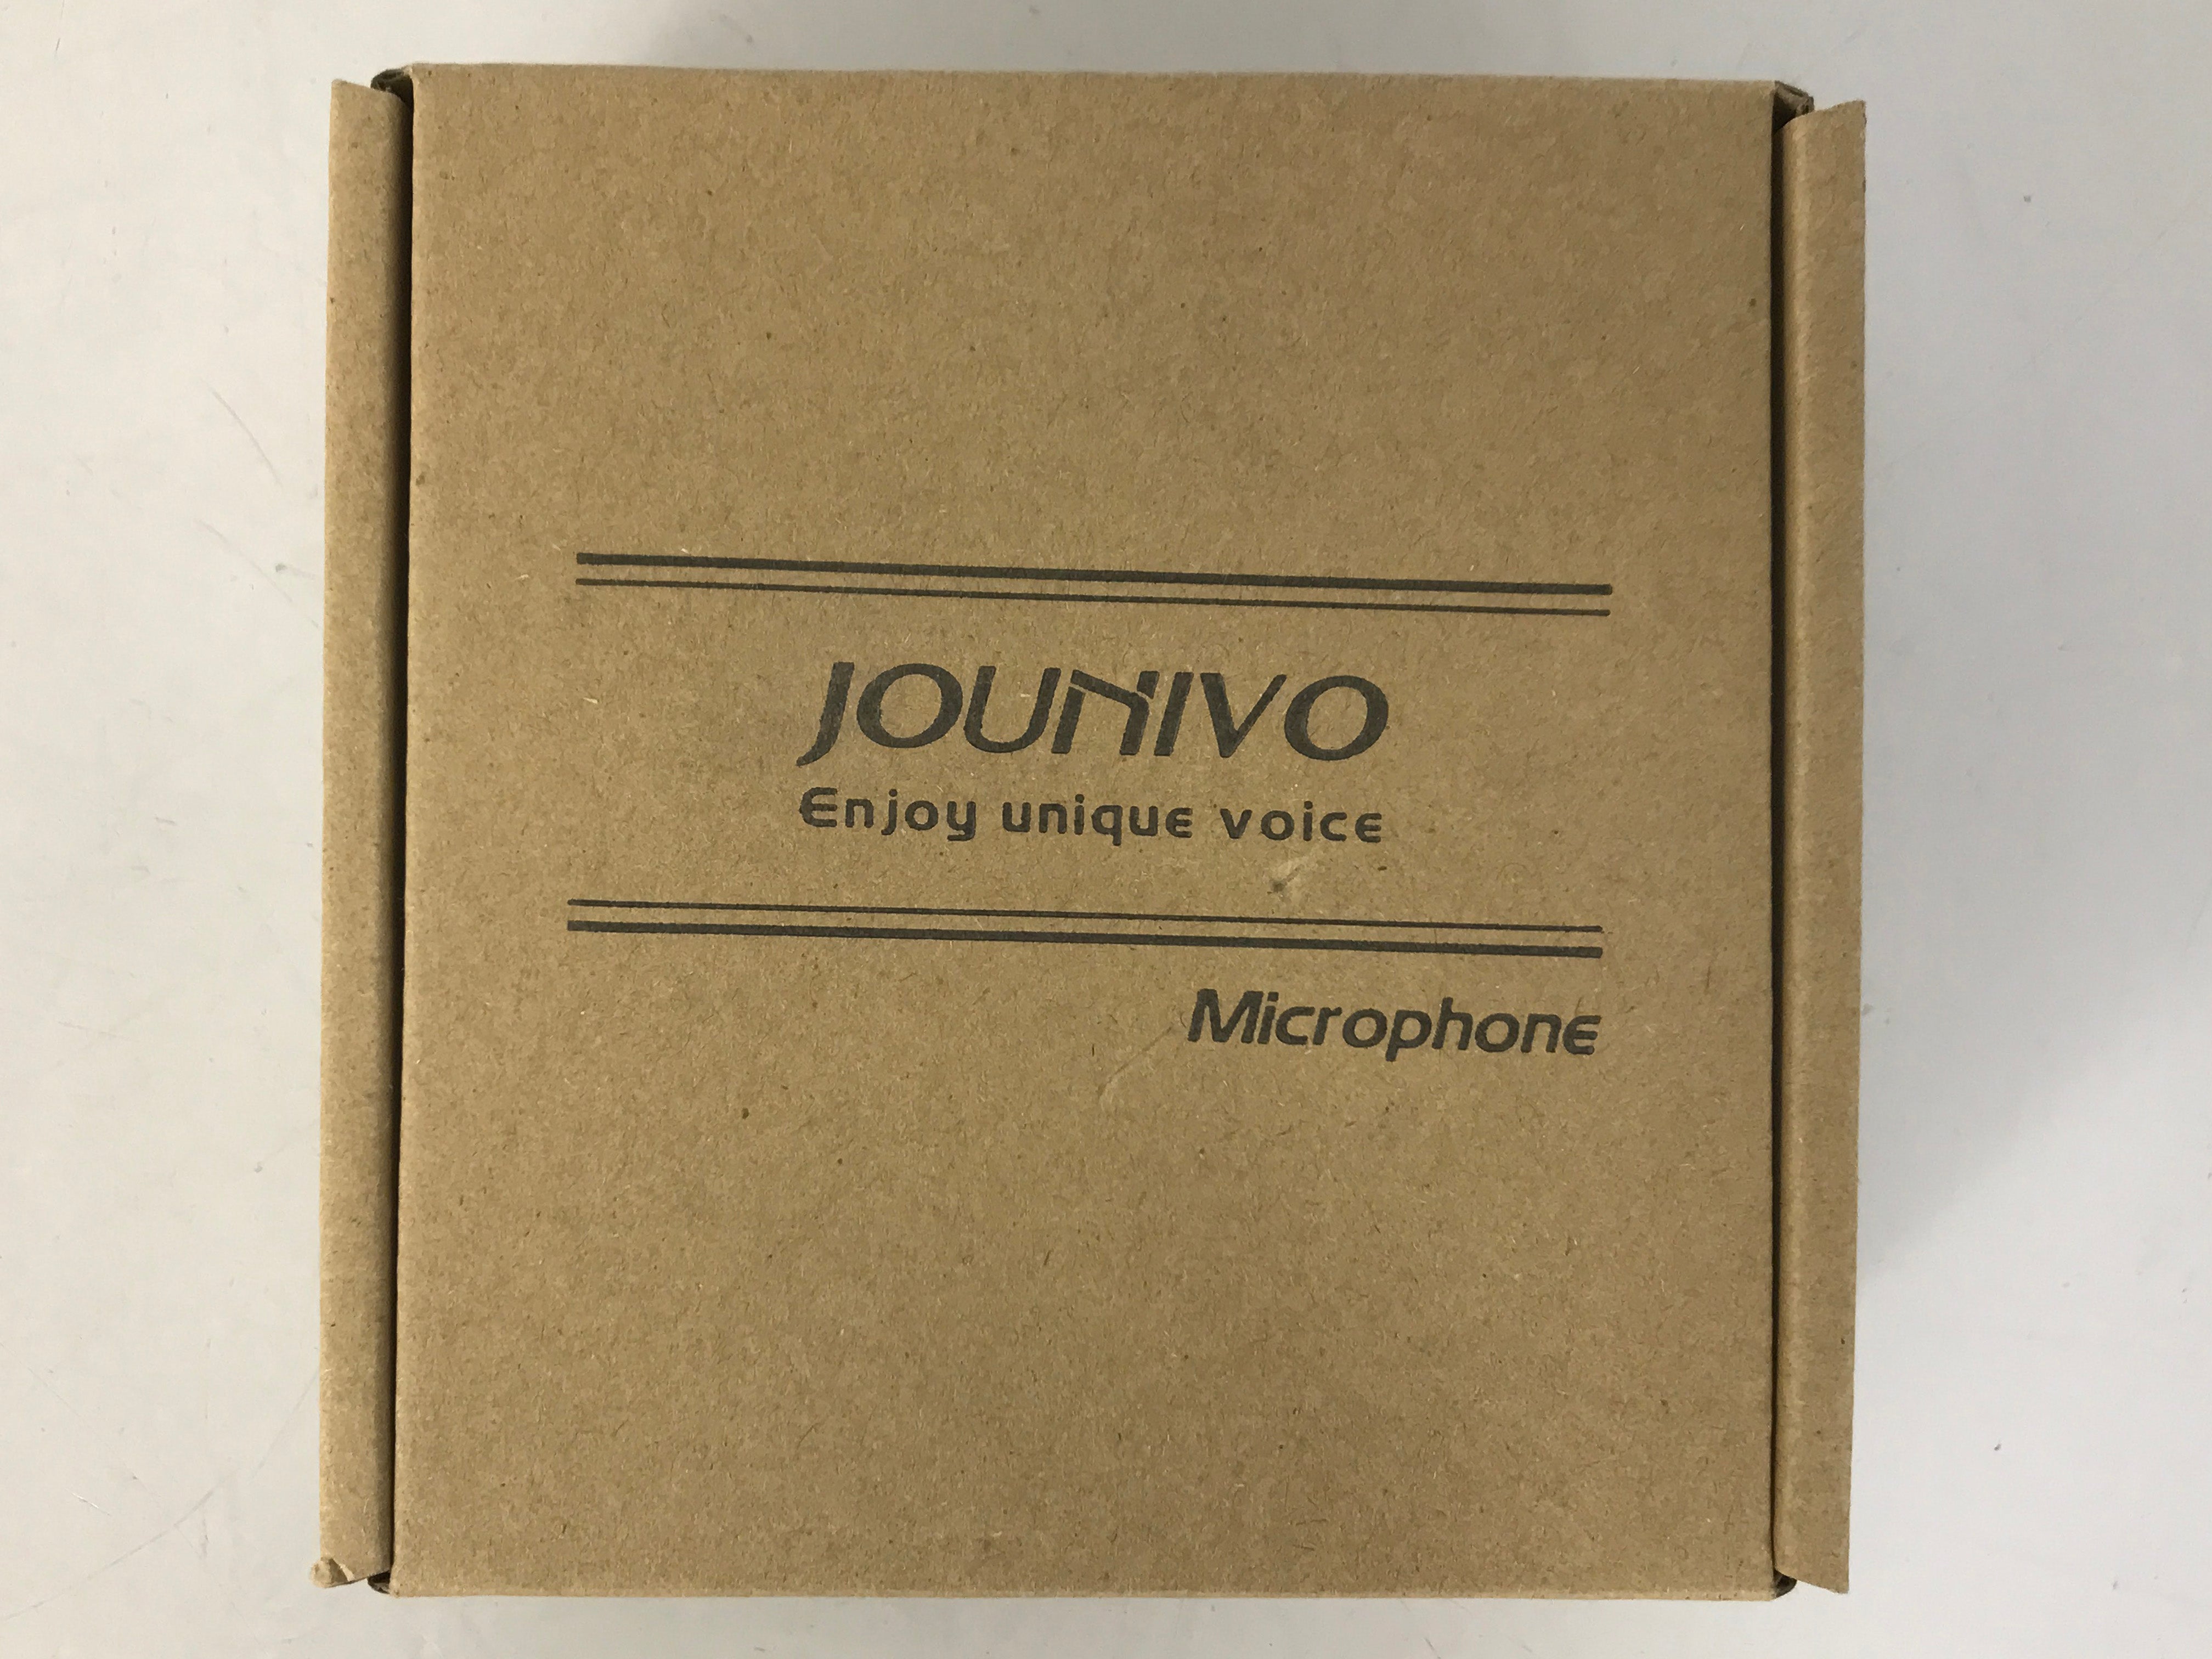 Using the Jounivo USB Microphone